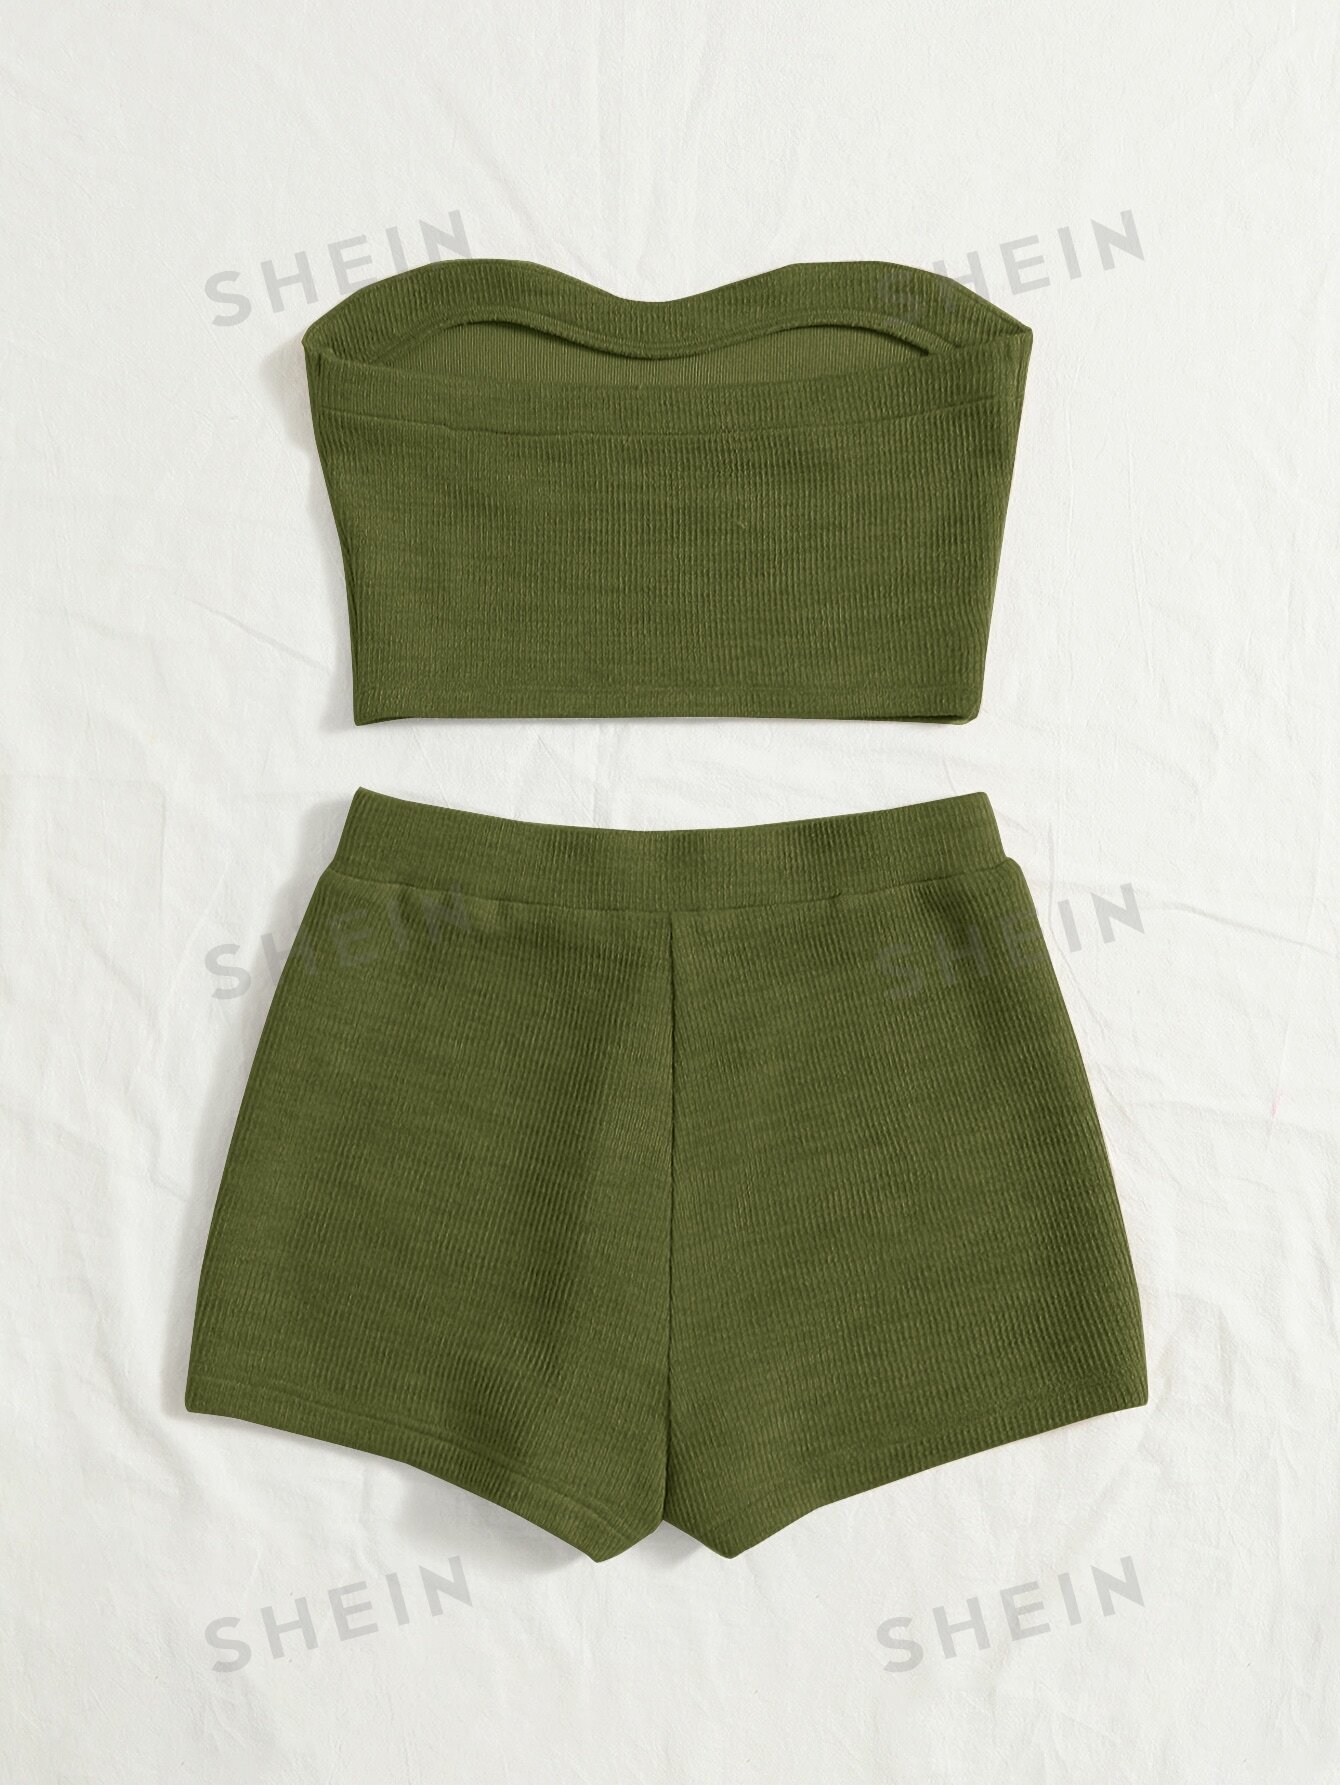 SHEIN WYWH WYWH Женский вязаный топ в рубчик для отдыха и шорты цвета хаки в байкерском стиле, армейский зеленый